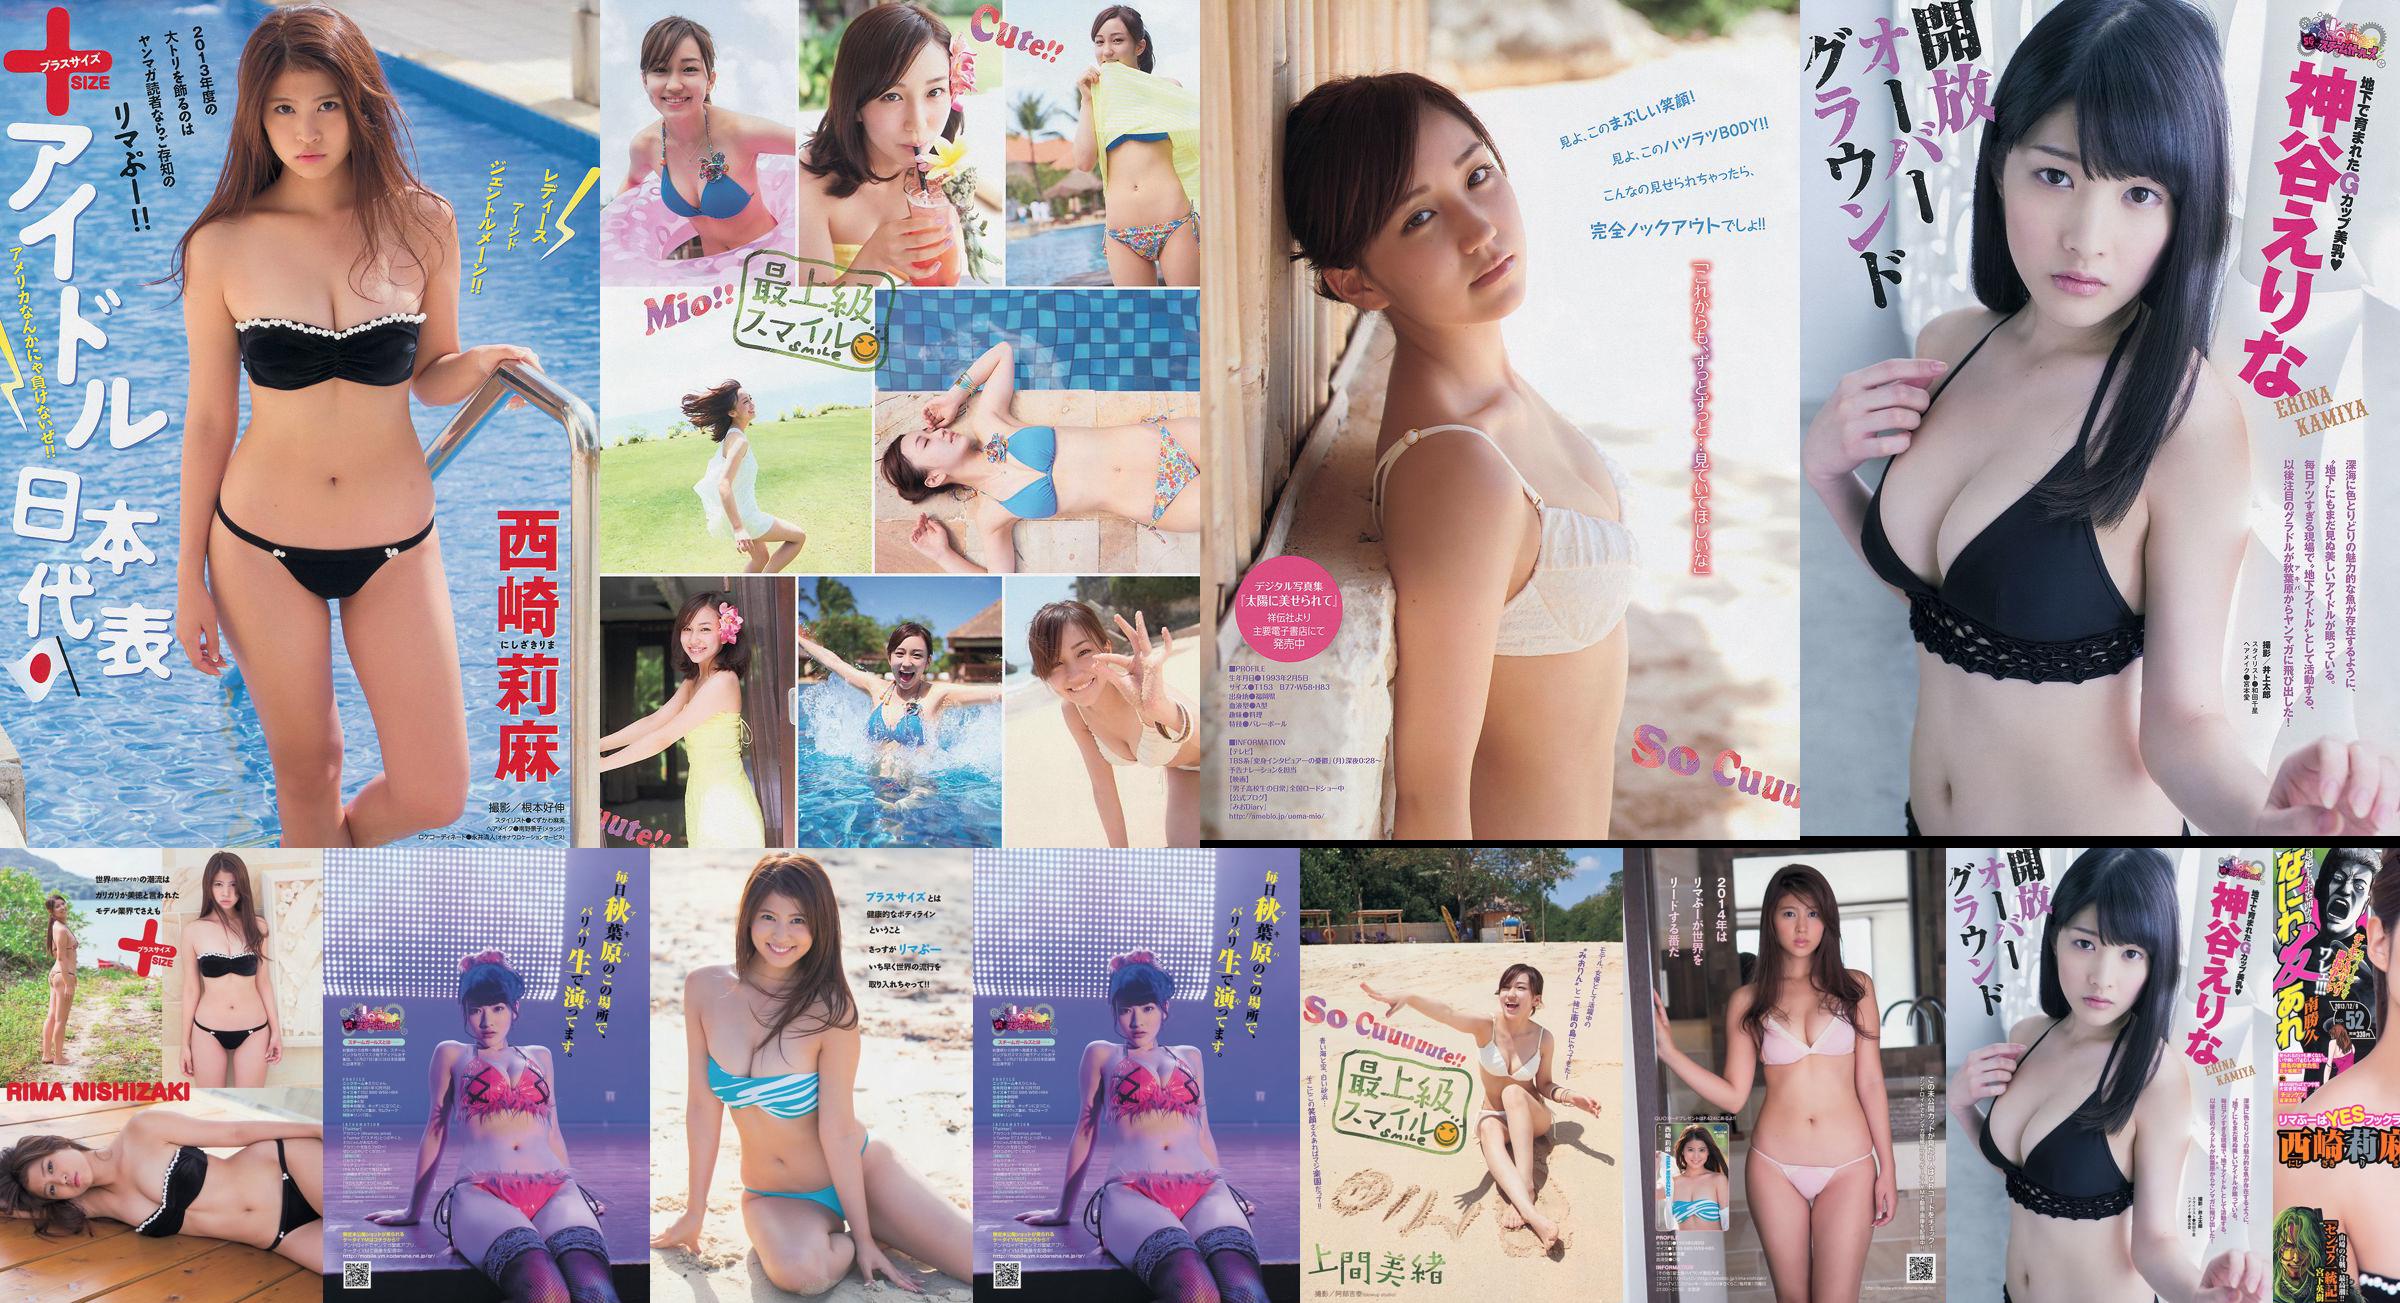 [Young Magazine] Rima Nishizaki Mio Uema Erina Kamiya 2013 No.52 Photo Moshi No.62fb4f Page 1